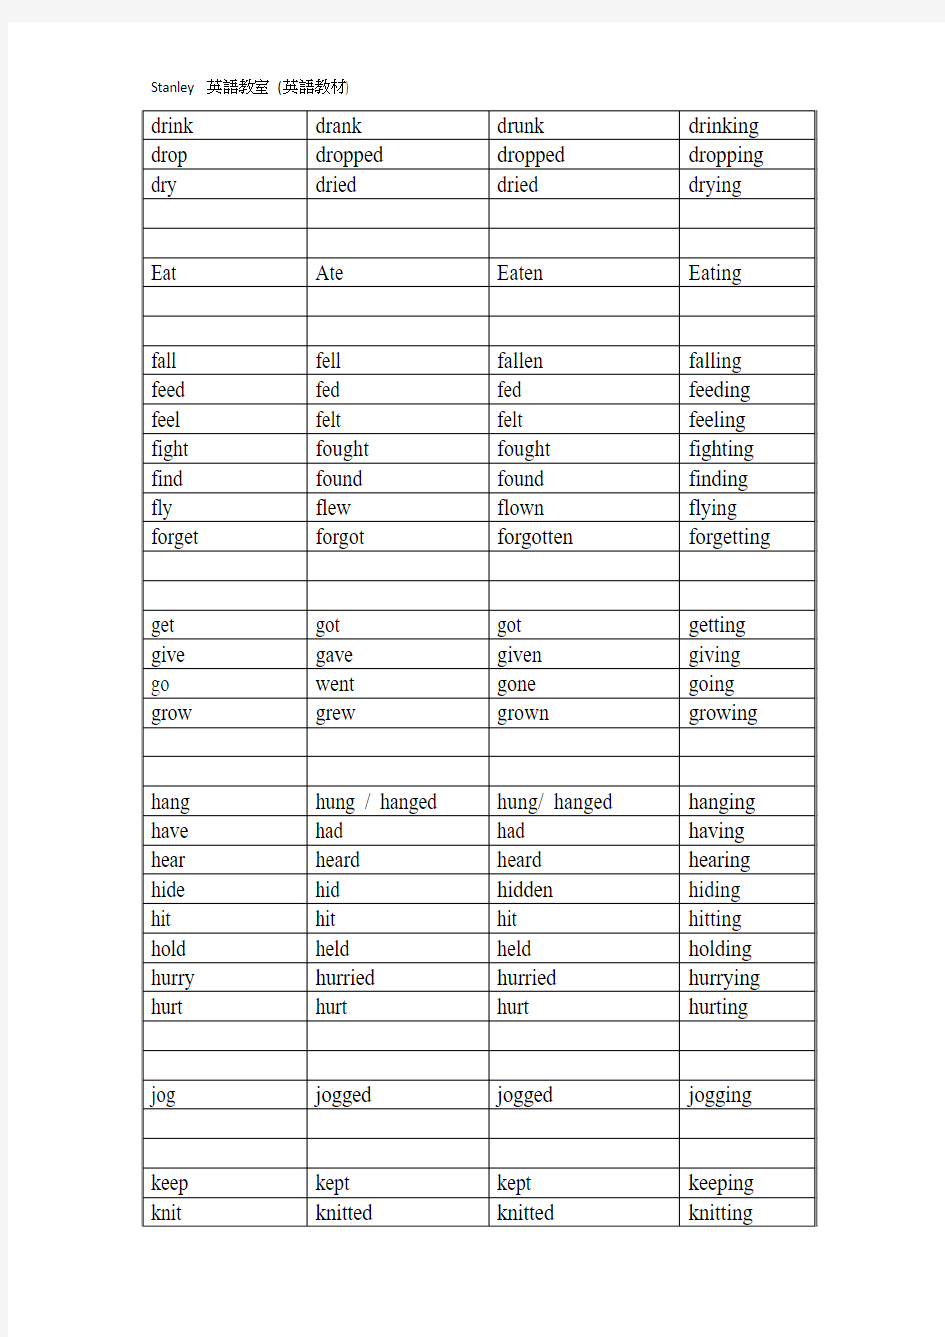 Verb Table 动词表